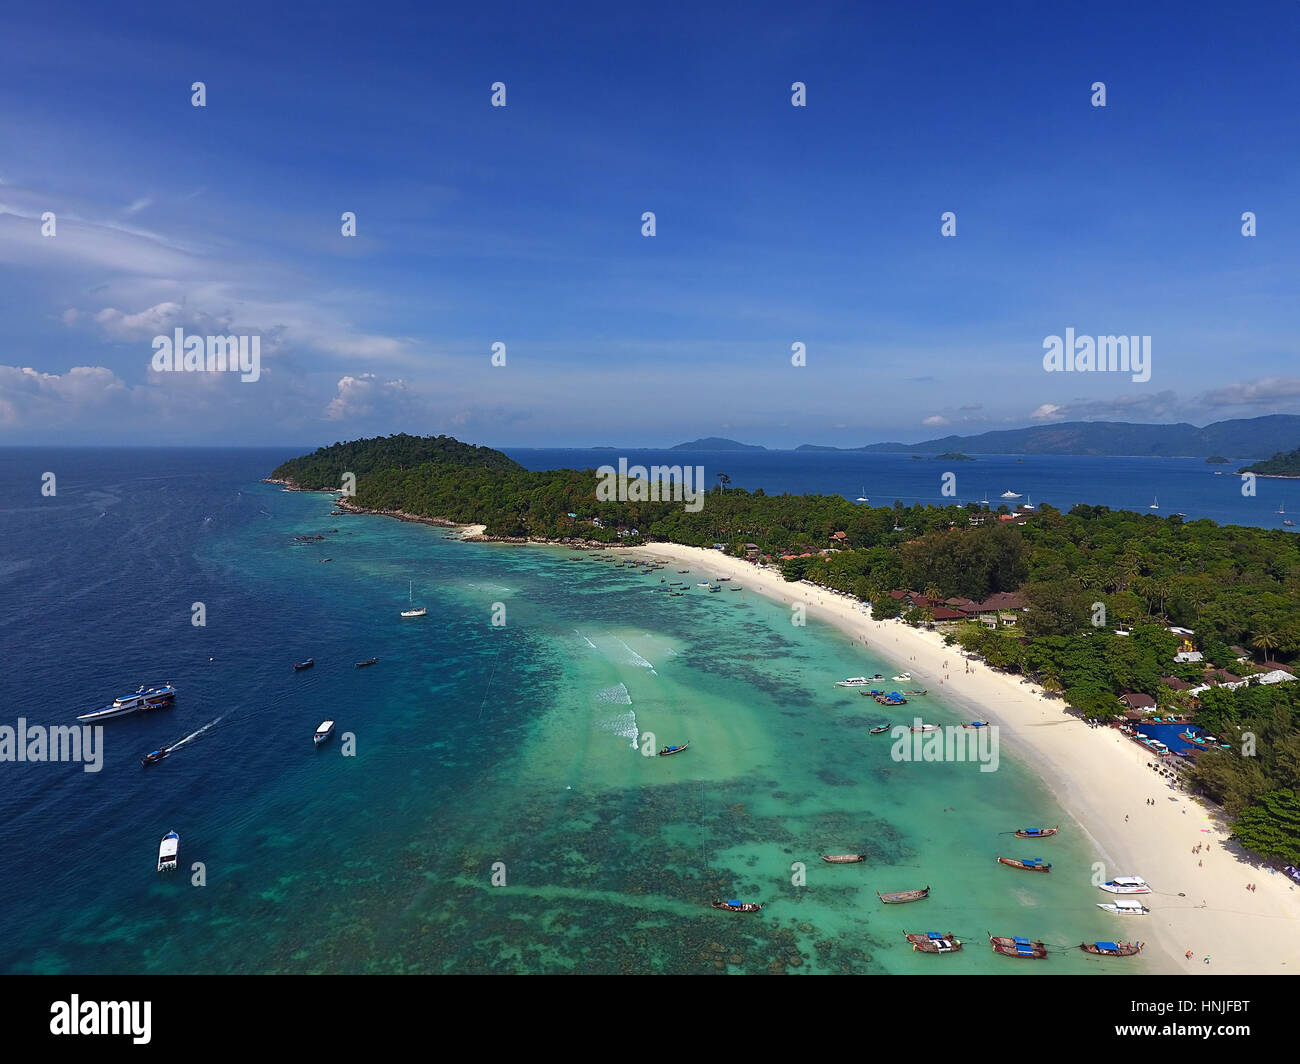 Aerial view on tropical Ko Lipe island in the Andaman Sea, Thailand Stock Photo